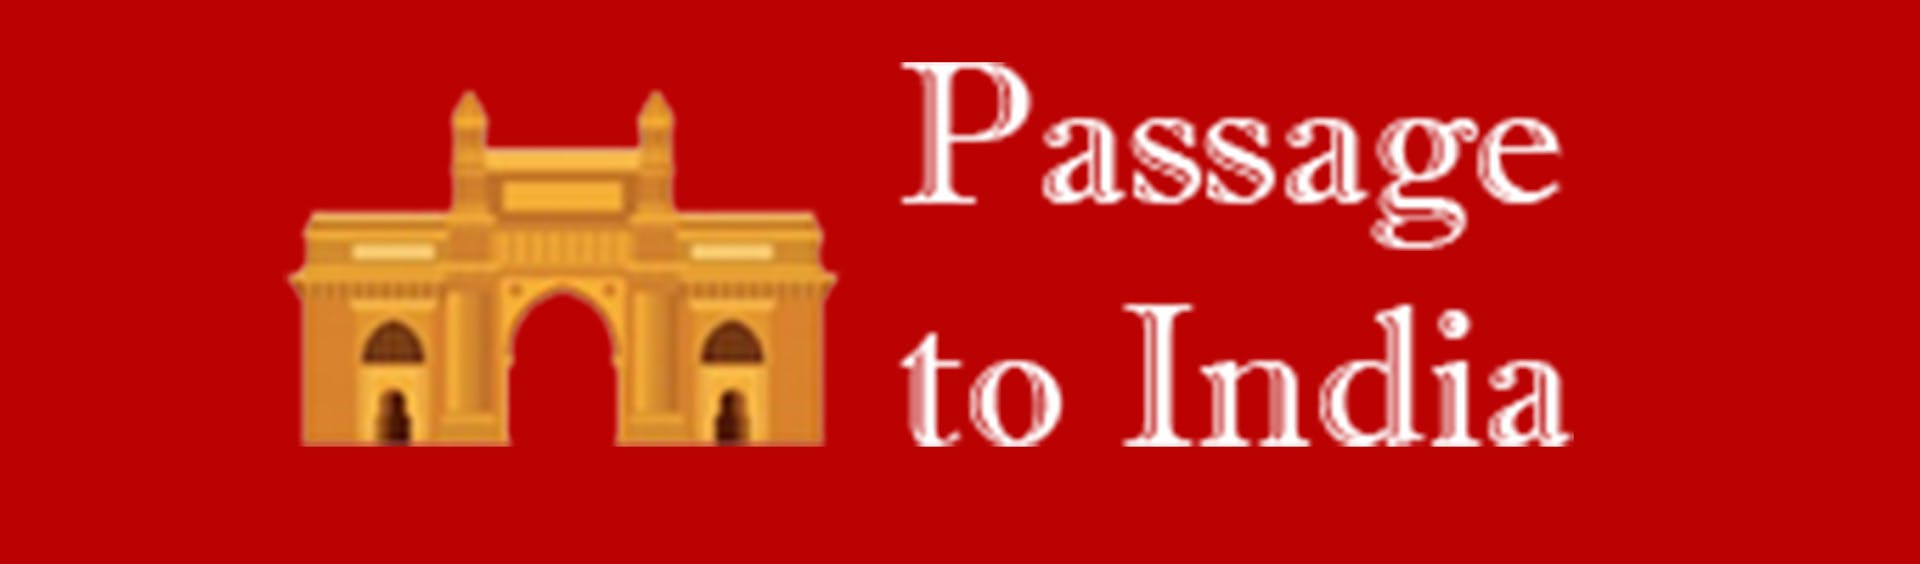 Passage 2 India